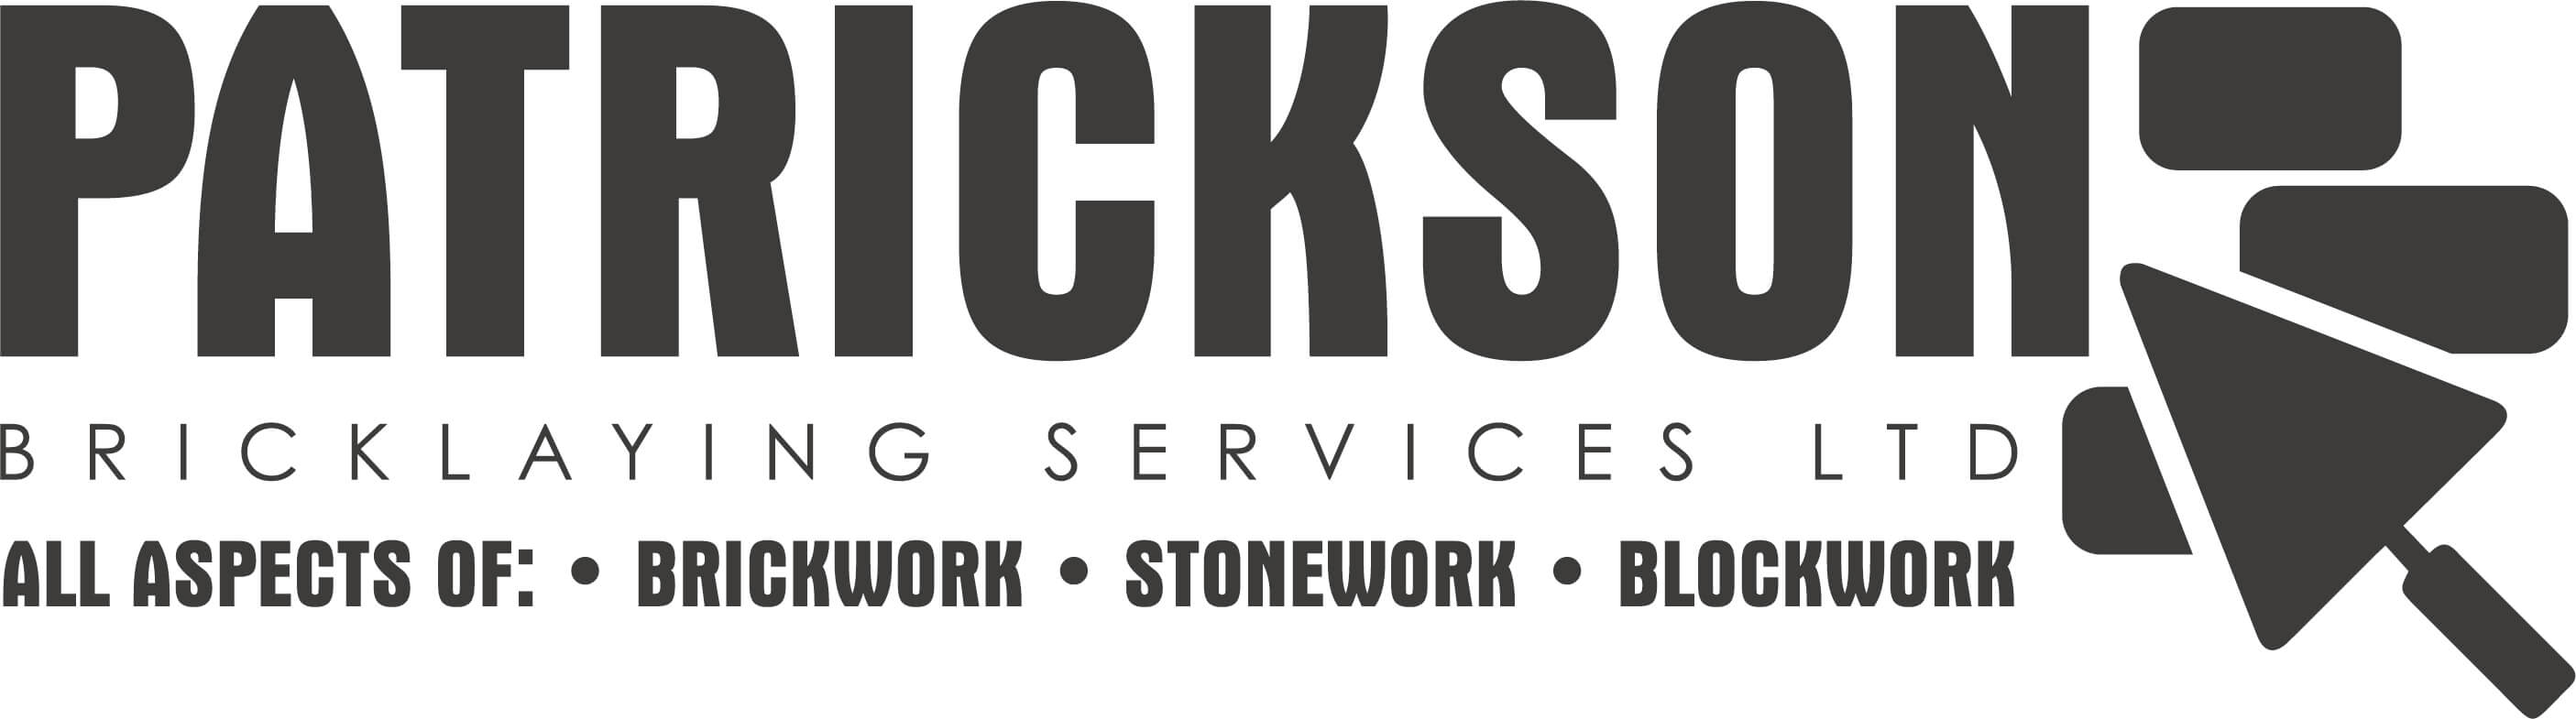 Patrickson Bricklaying Services Ltd 